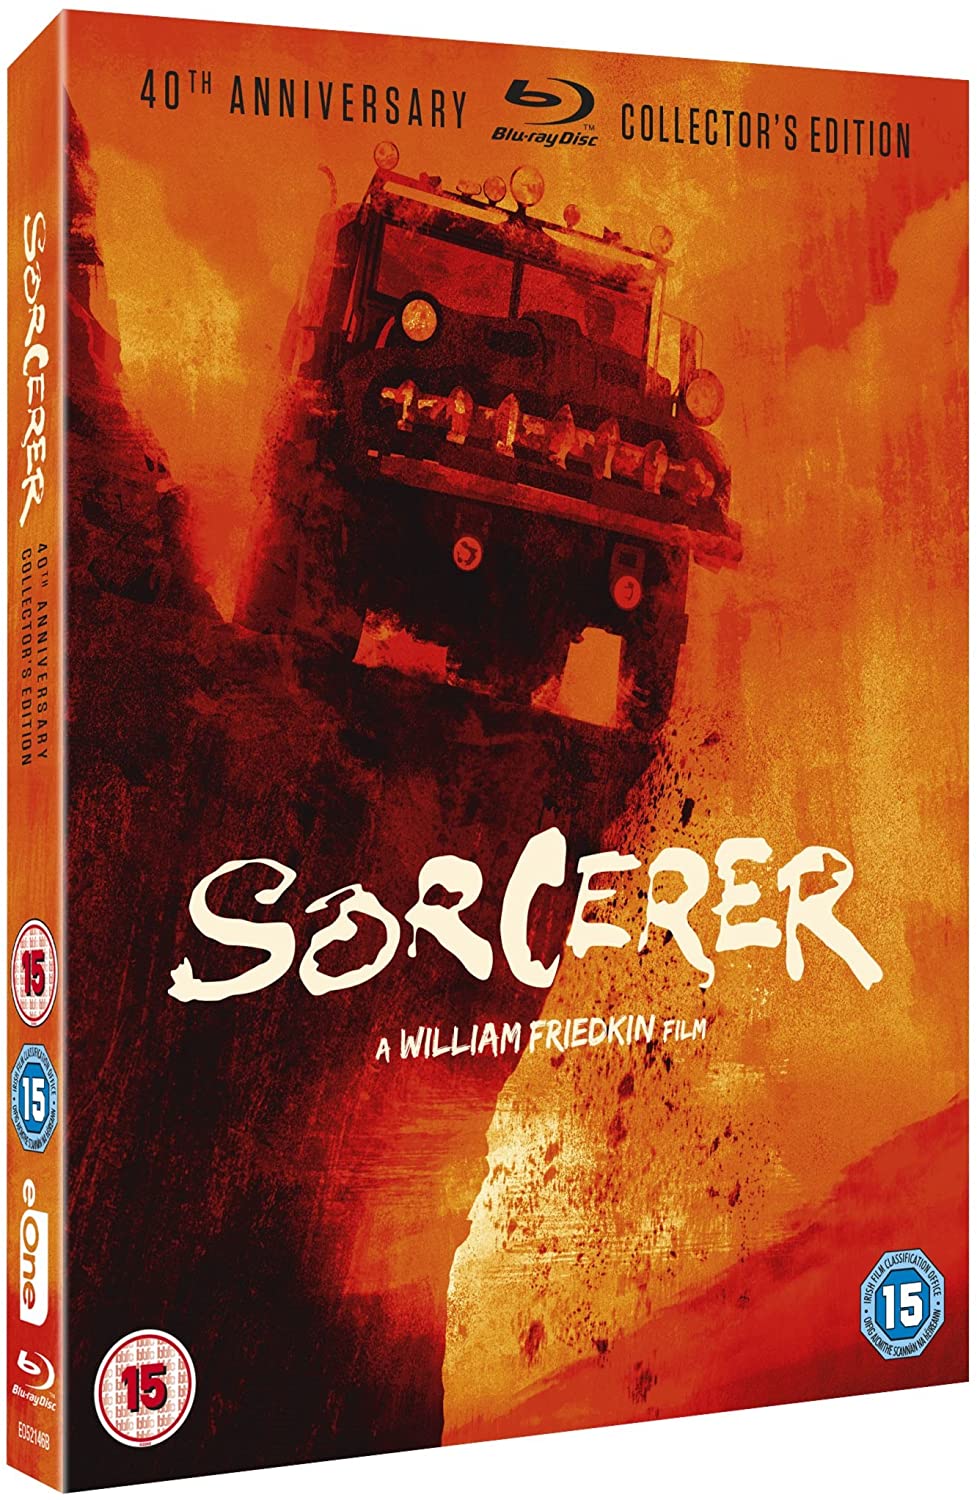 Sorcerer – Thriller/Drama [Blu-ray]